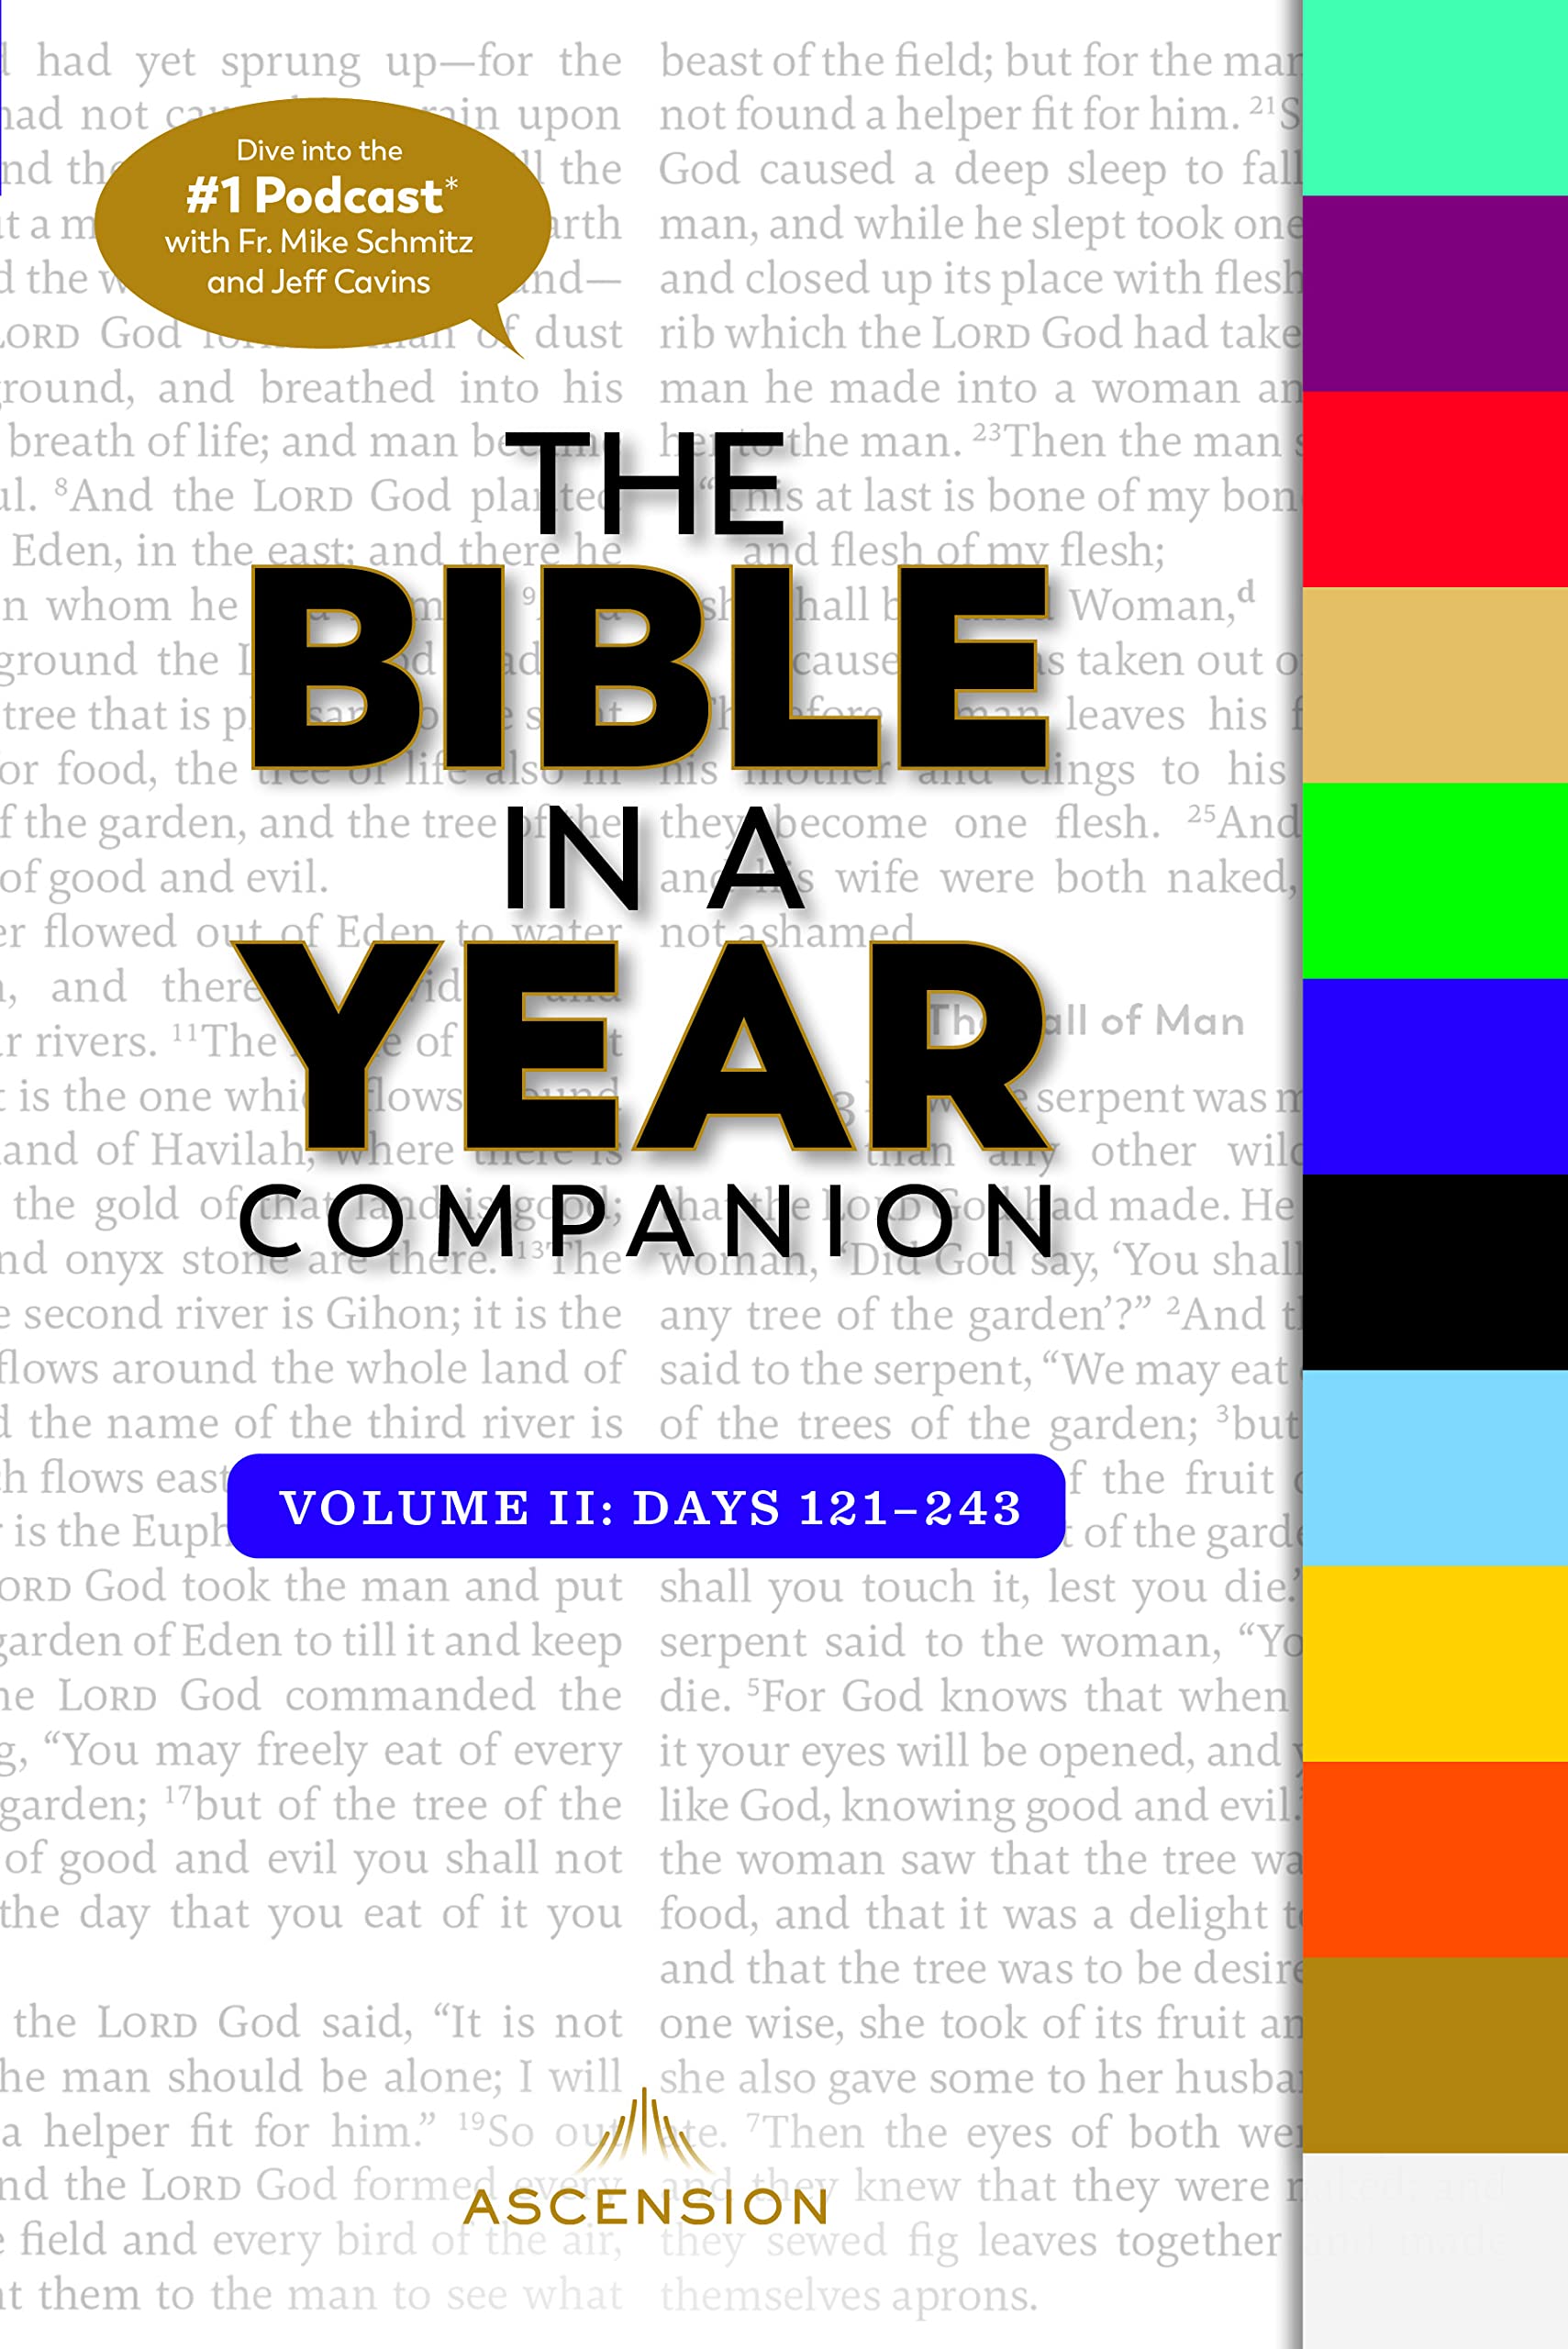 The Bible in a Year Companion, Volume II